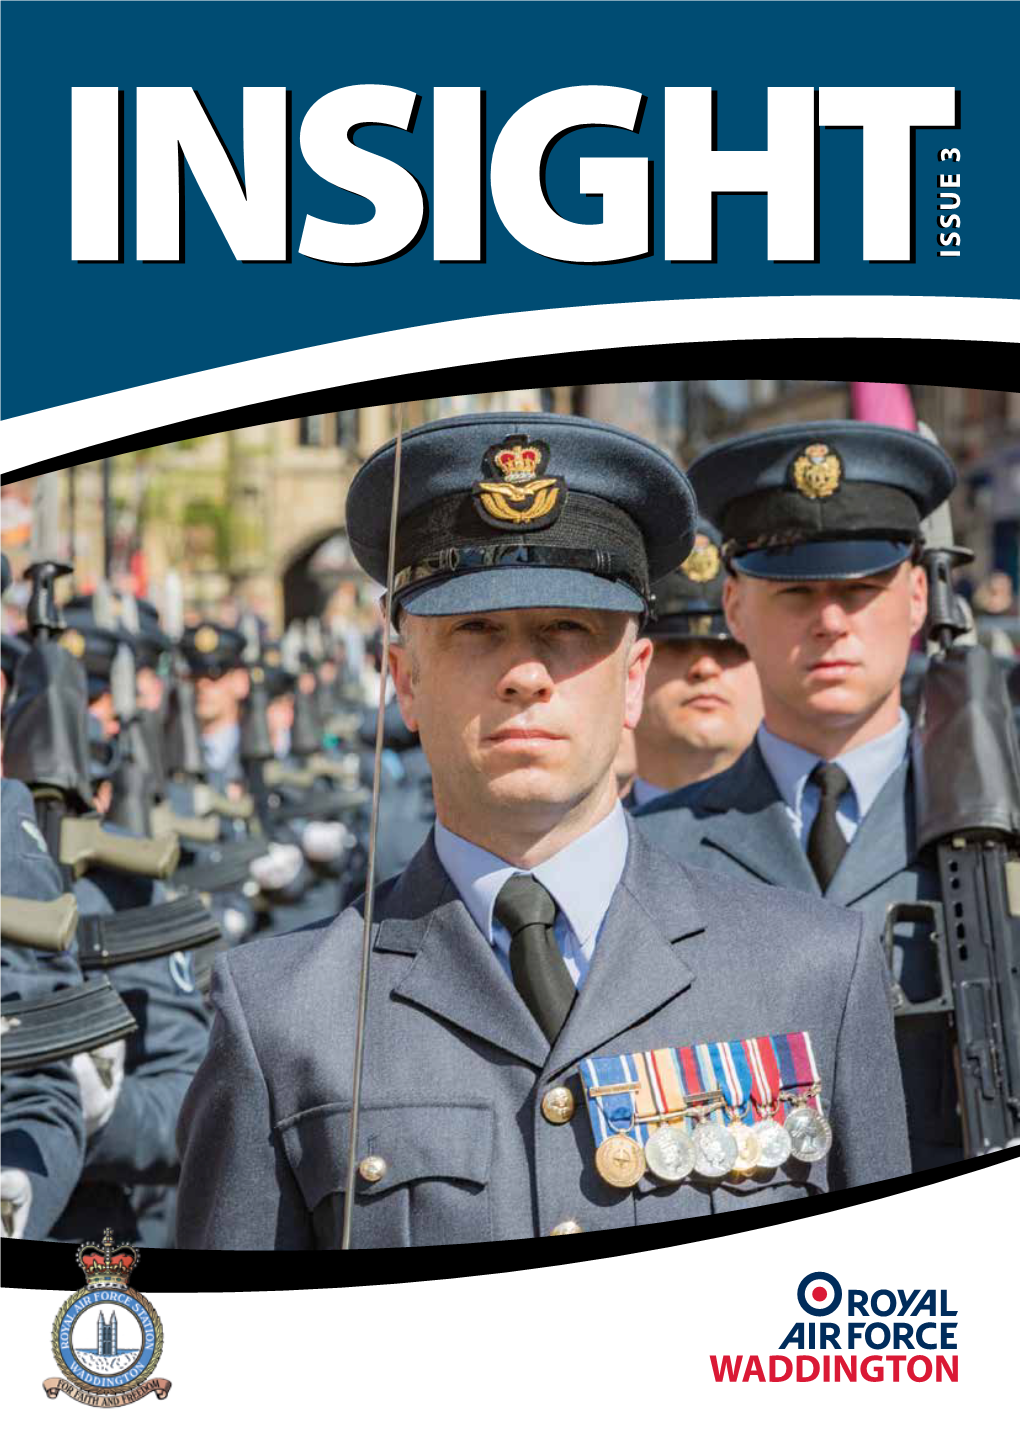 Insightmagazine 1